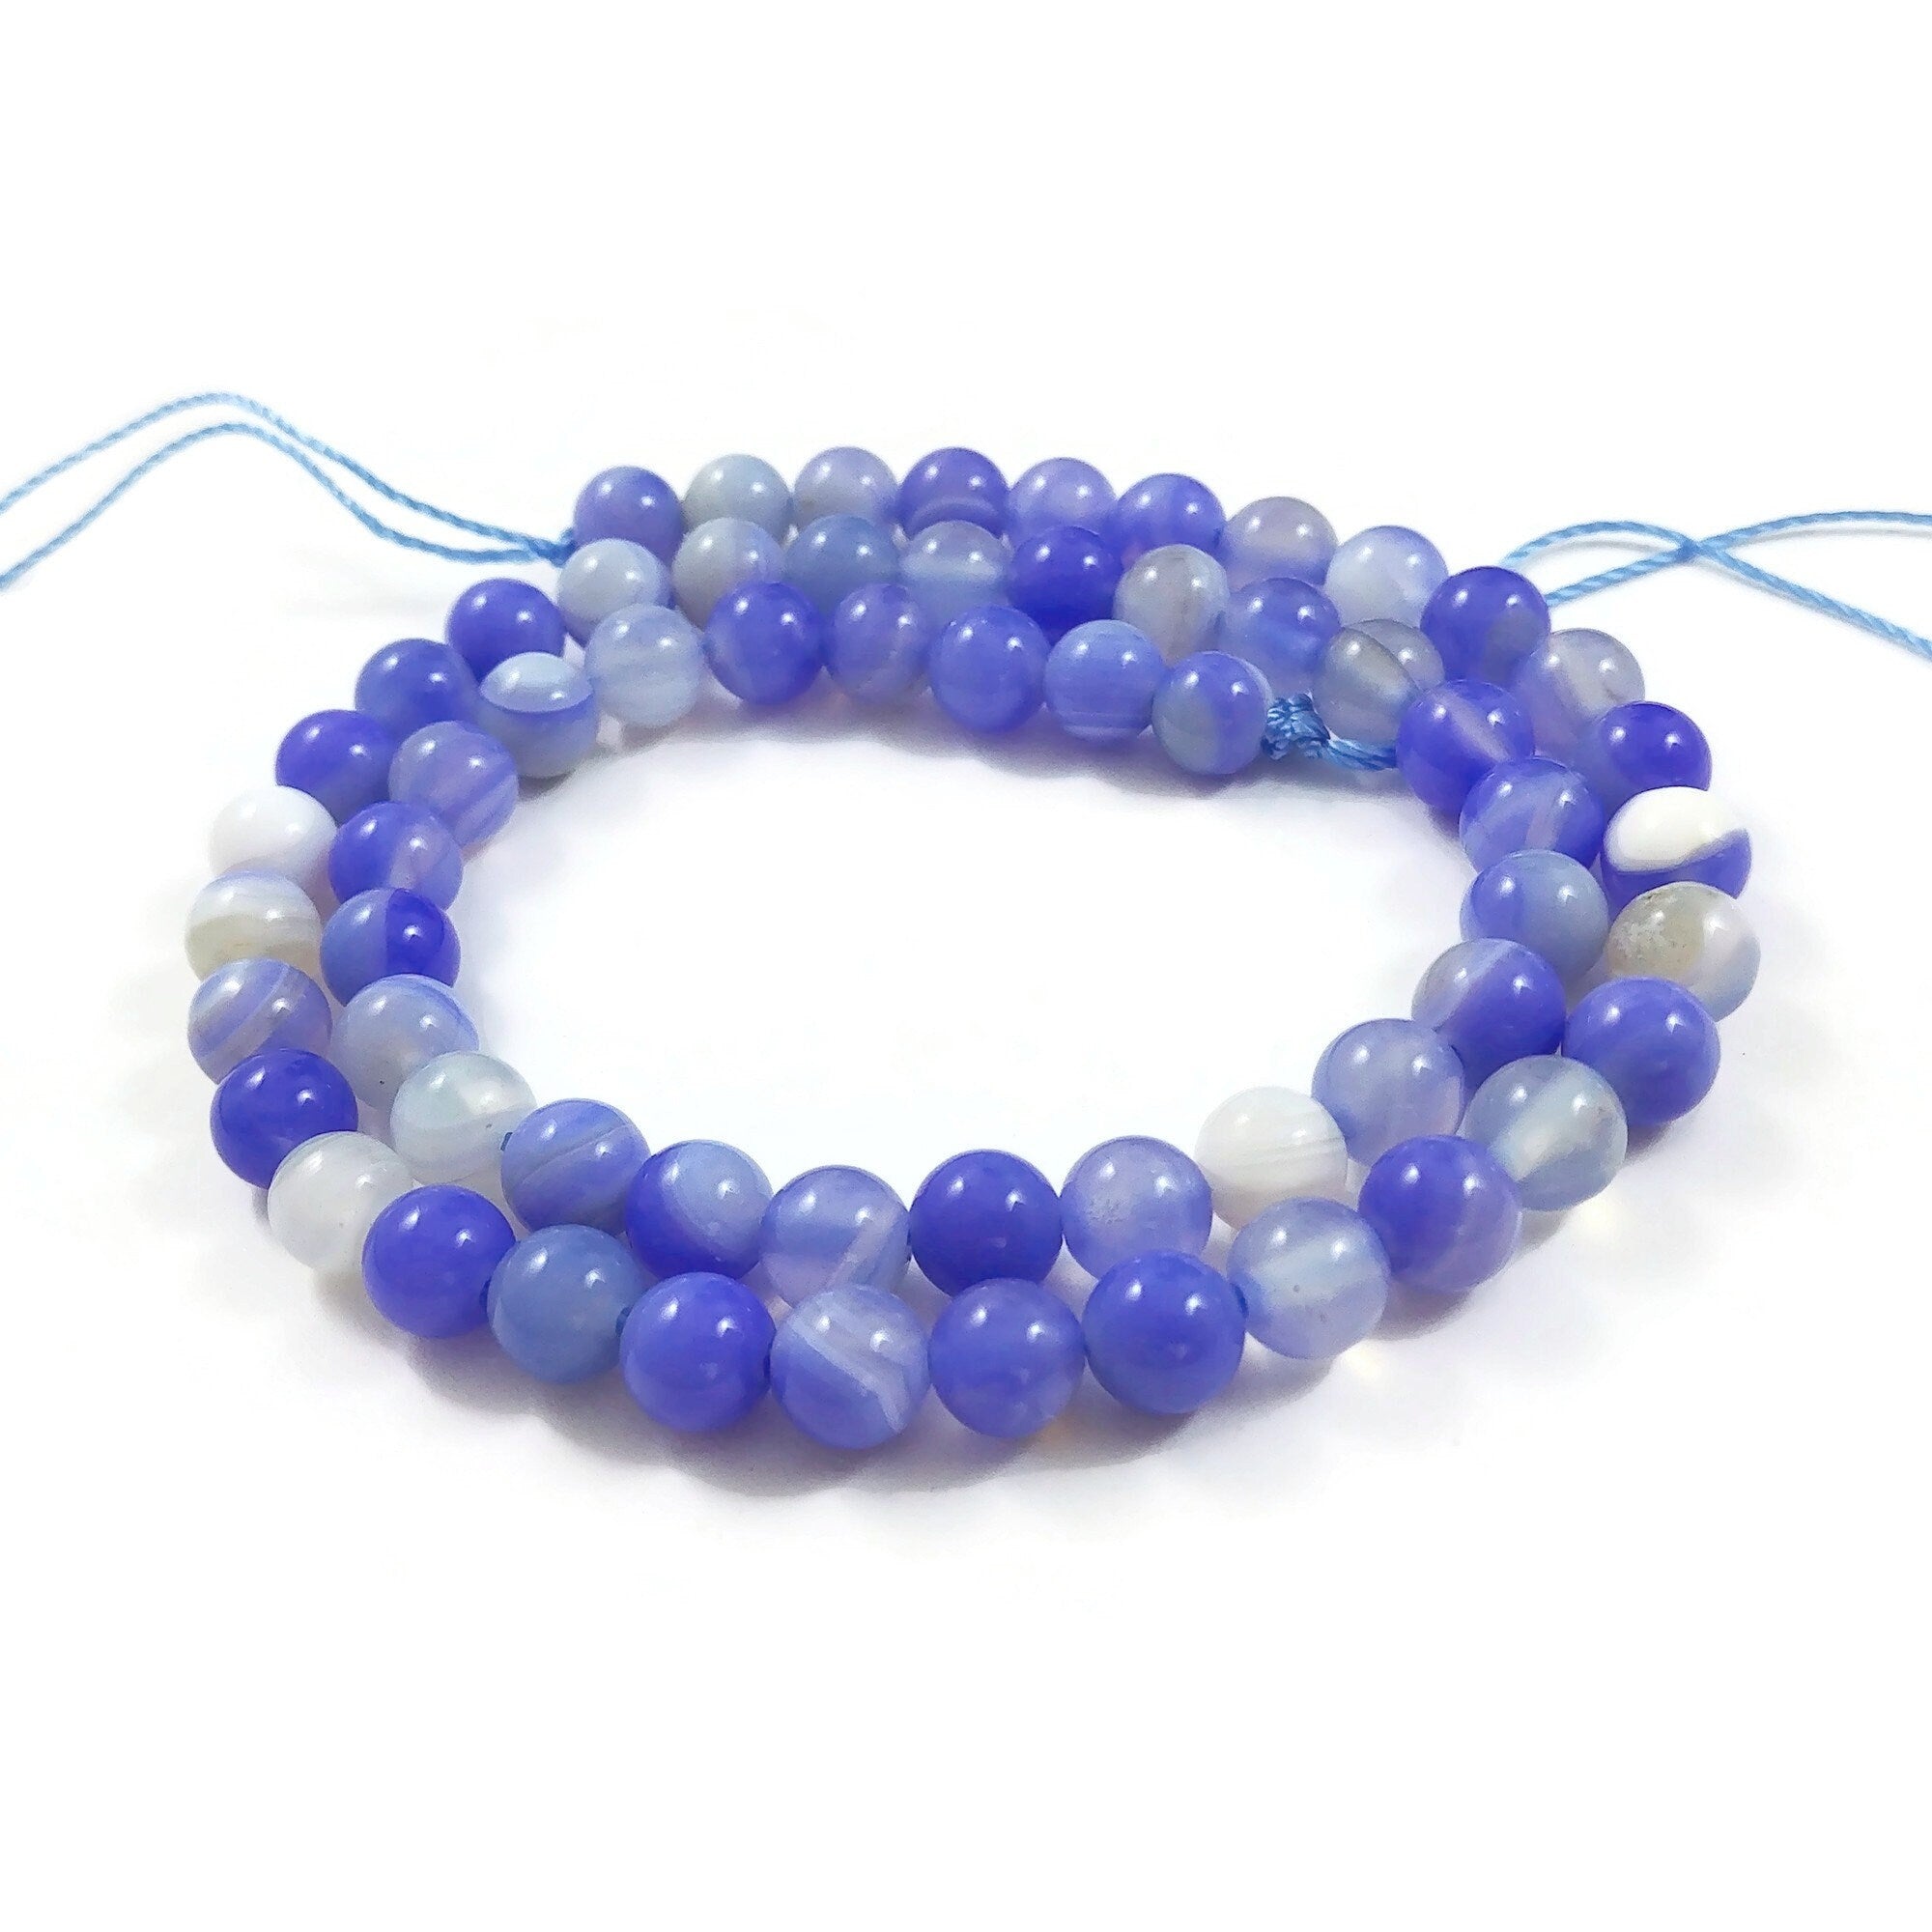 Natural blue chalcedony beads, 6mm round gemstone beads, Jewelry making strand